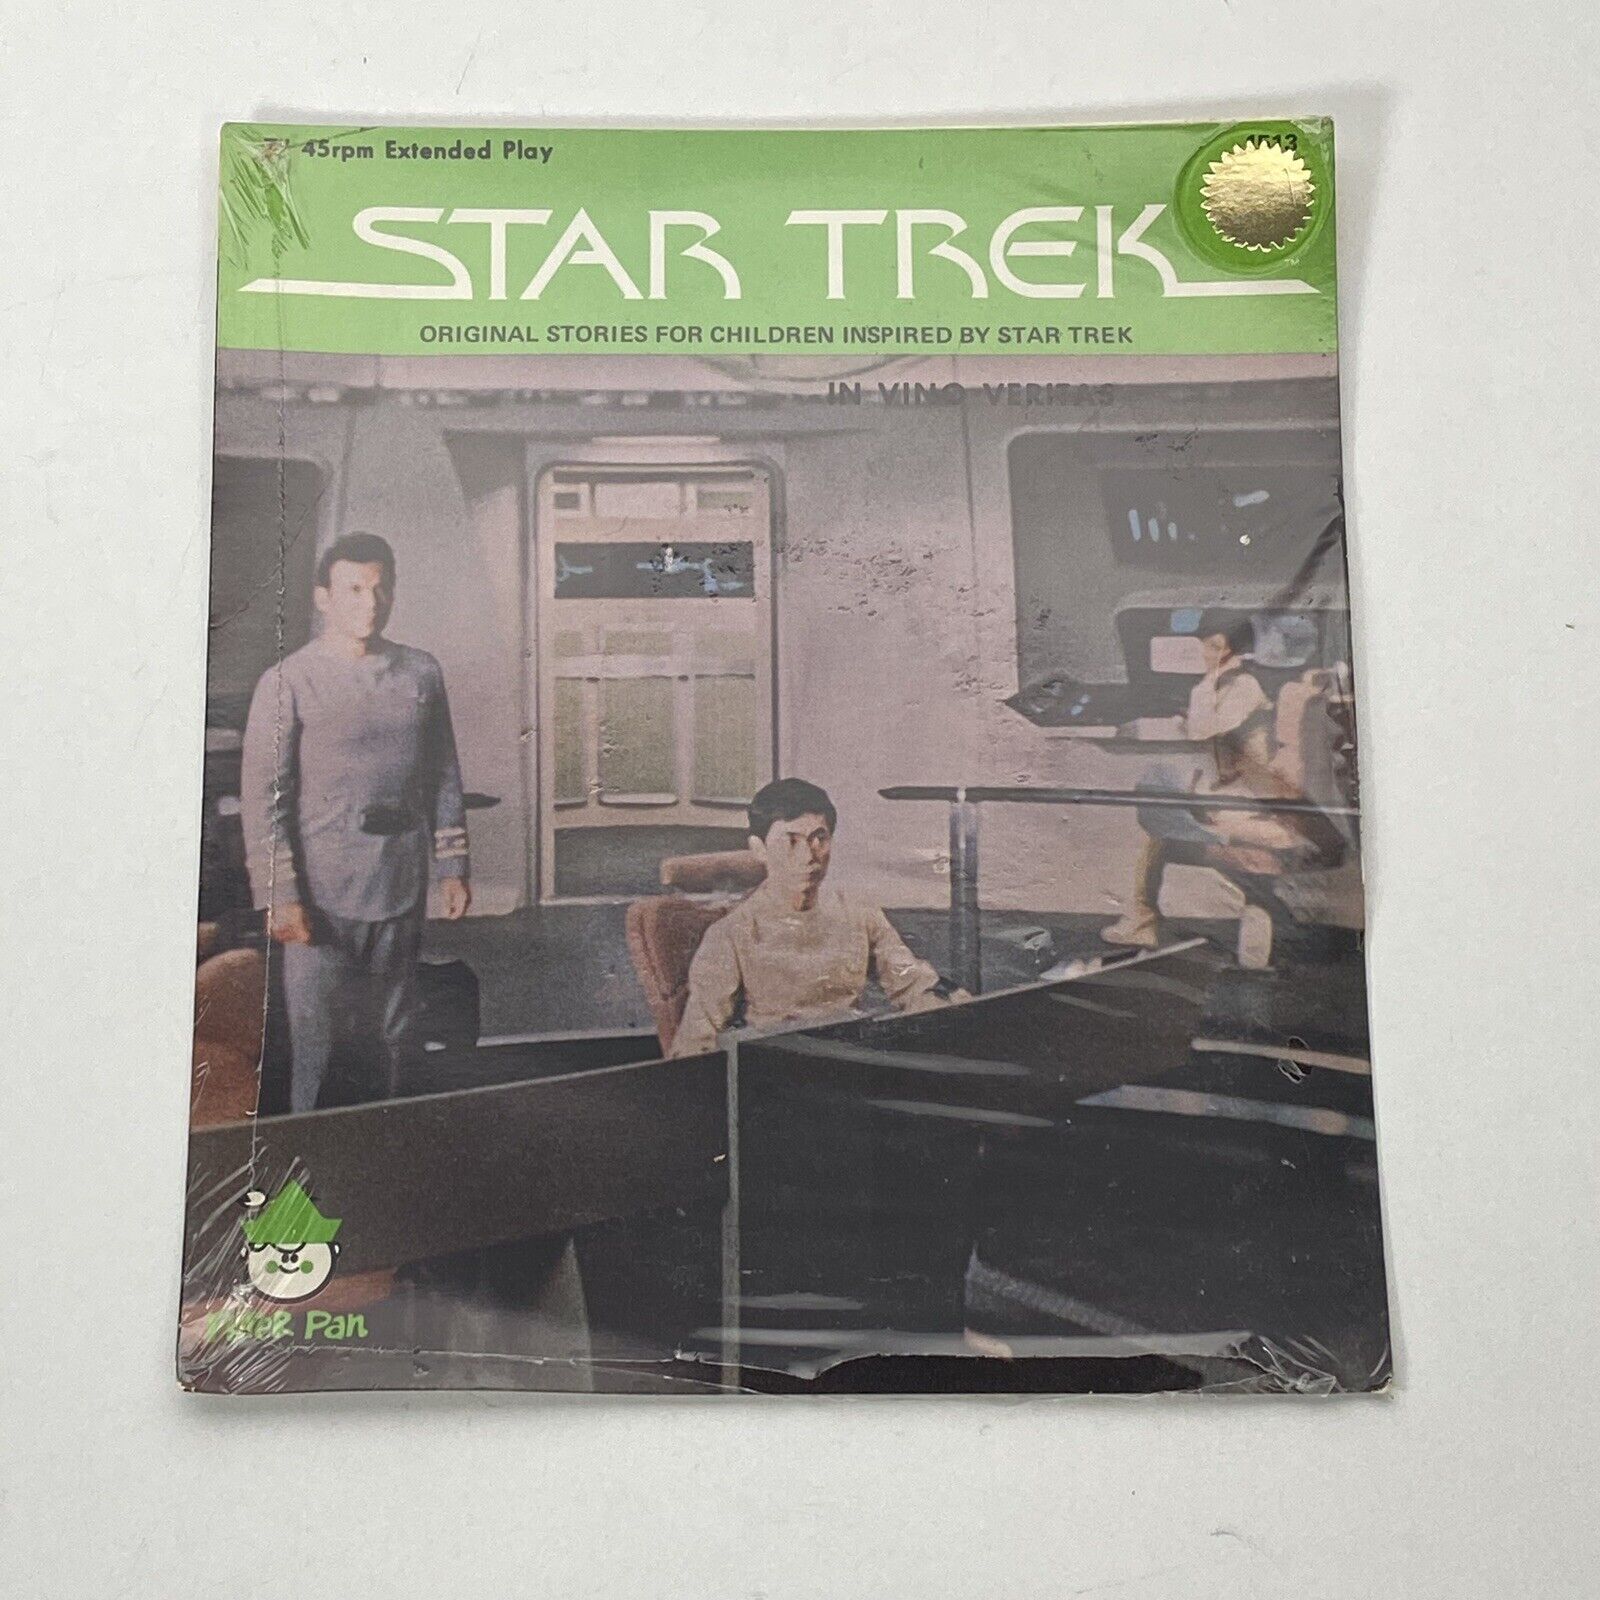 Star Trek 1979 In Vino Veritas 45rpm Vinyl Record 7” NOS #1513